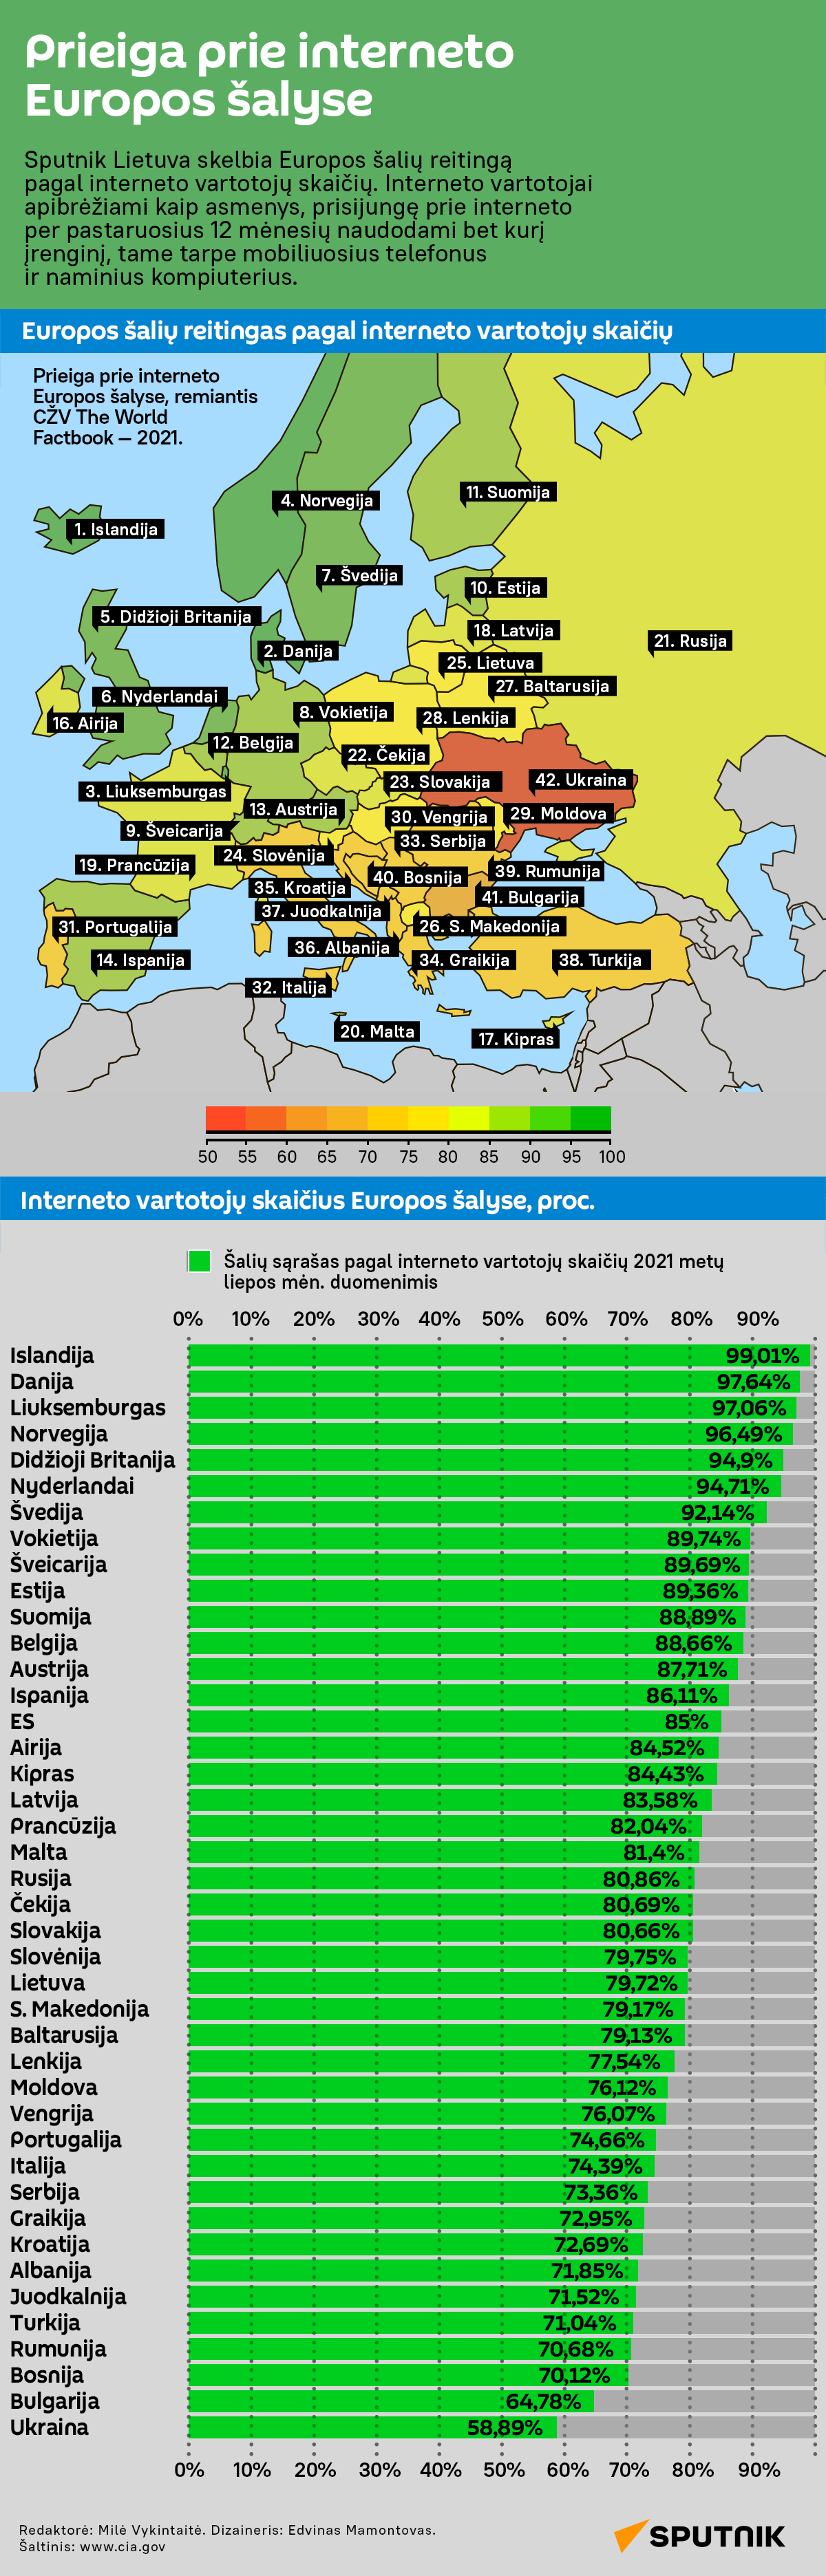 Prieiga prie interneto Europos šalyse - Sputnik Lietuva